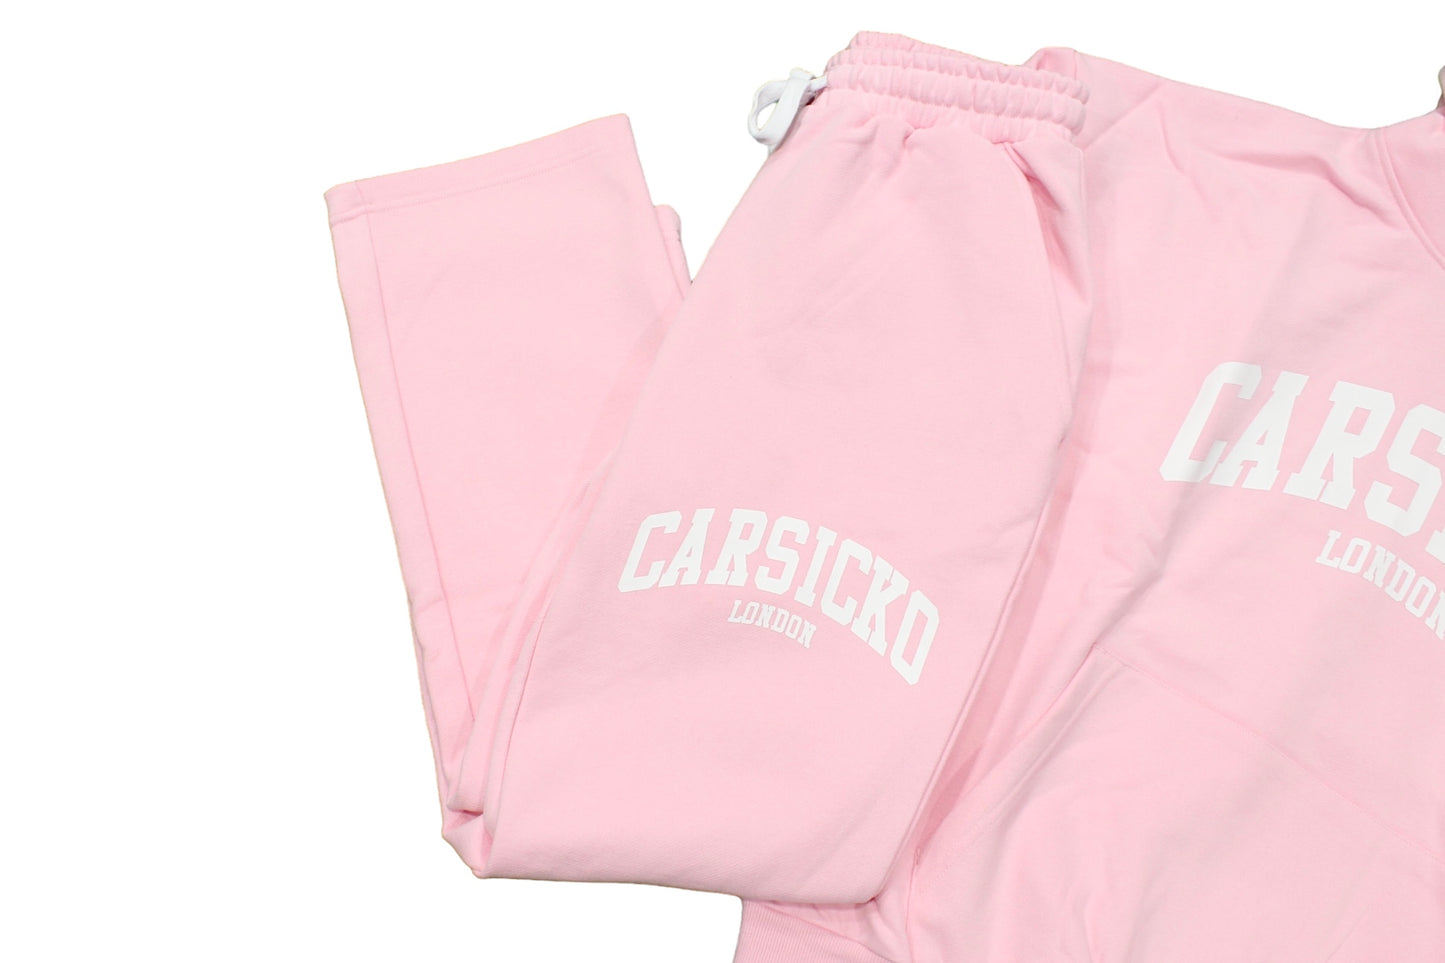 Carsicko London Pink Tracksuit Set